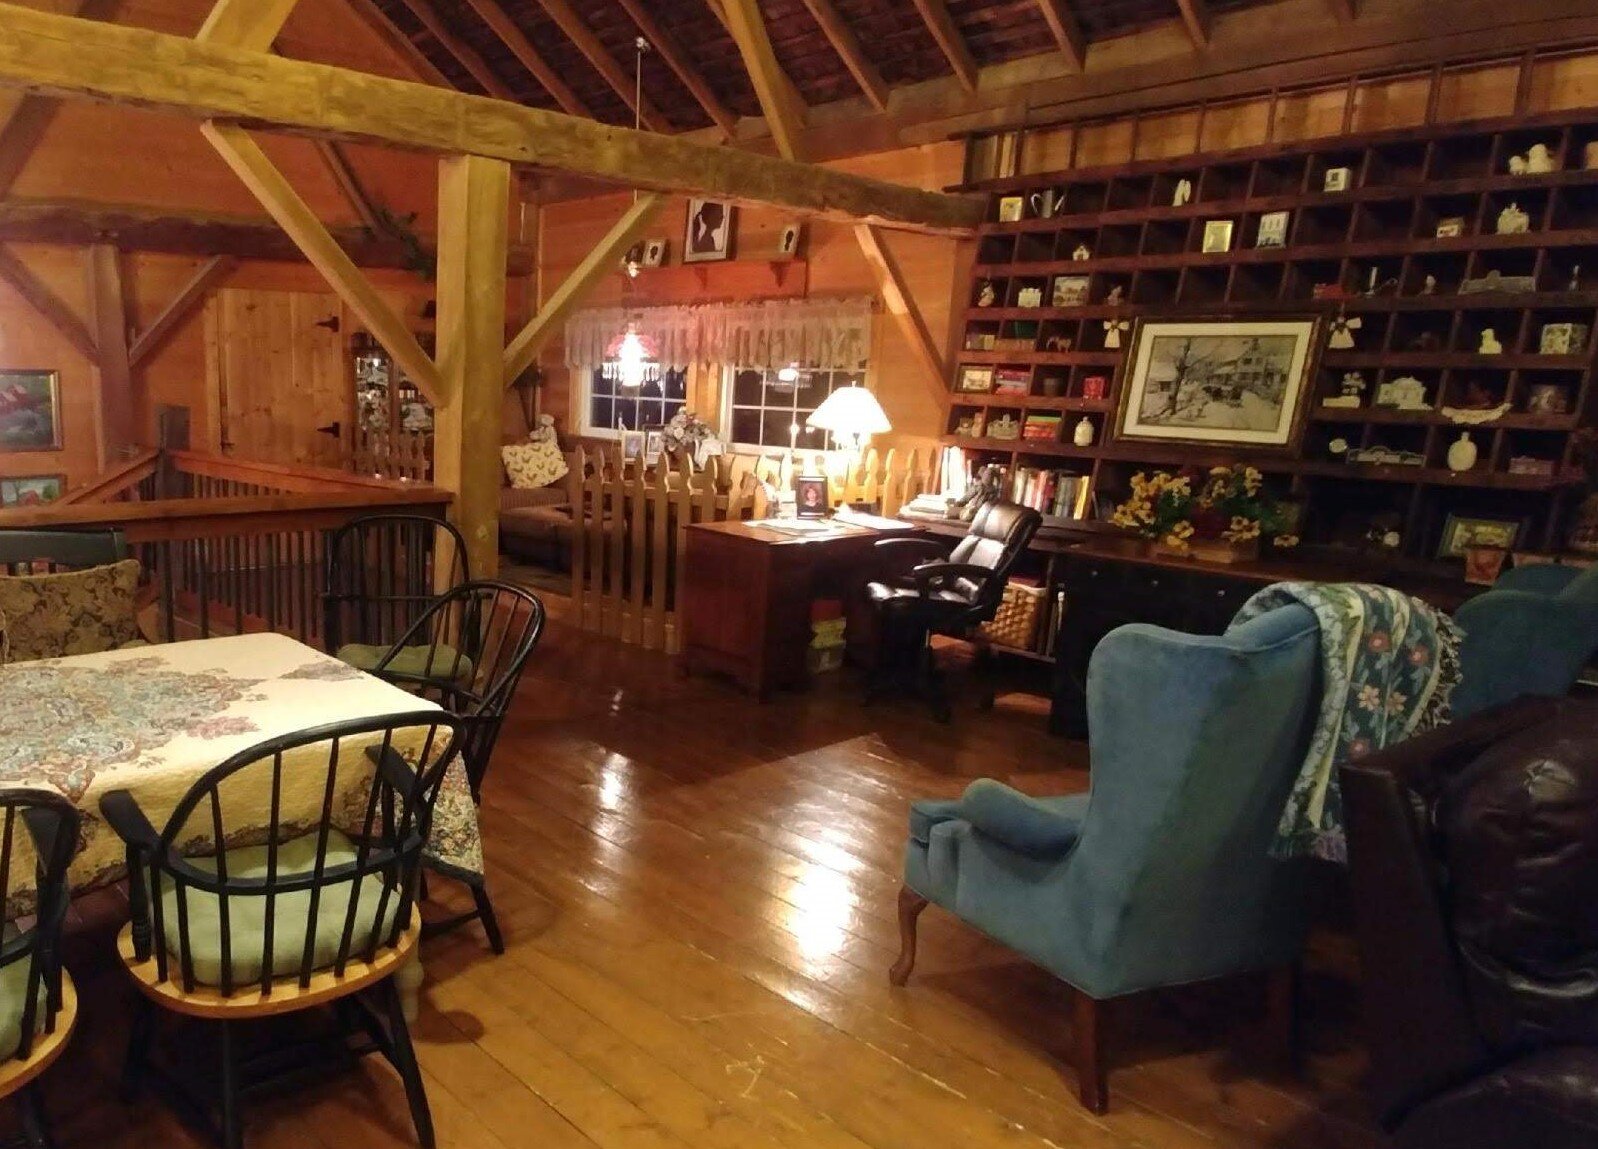 The interior of the Ridgeway's home.